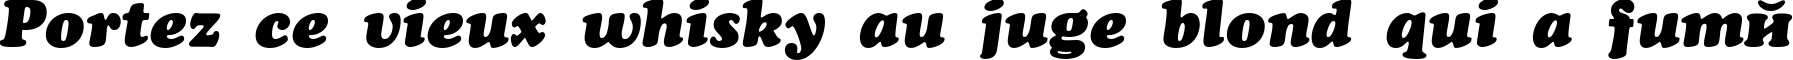 Пример написания шрифтом AG_Cooper Italic текста на французском